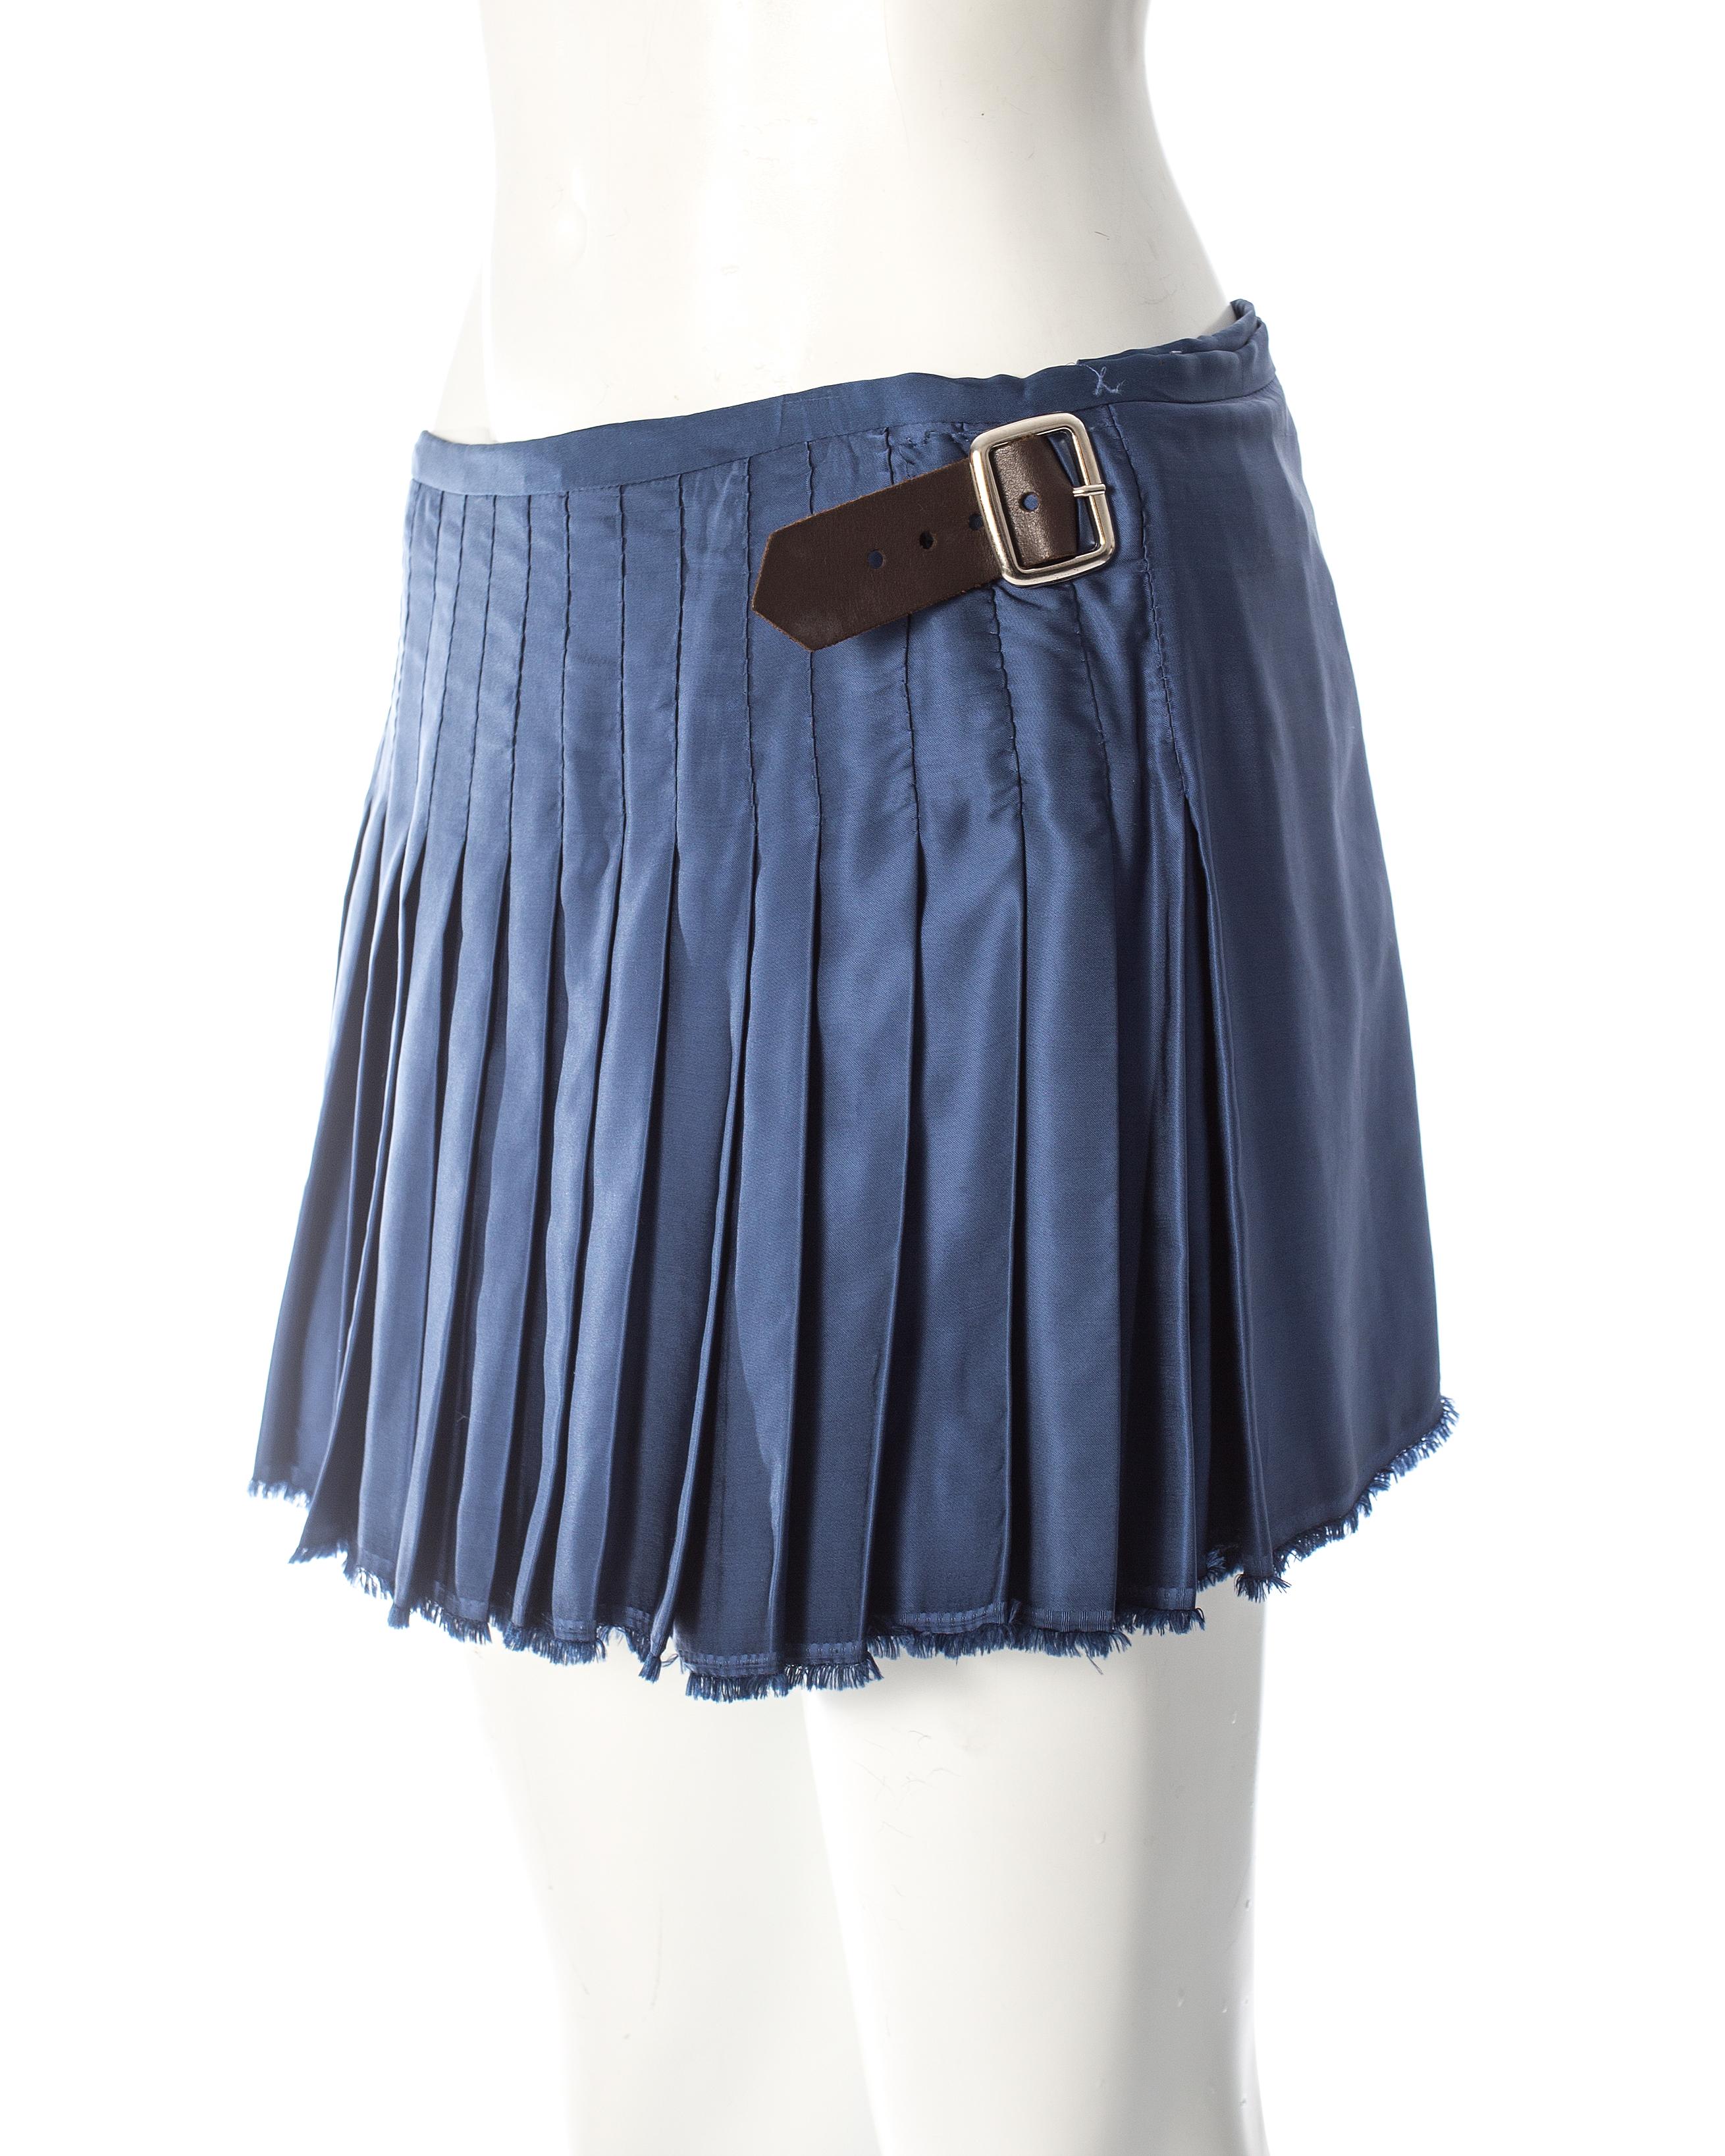 Vivienne Westwood, blue satin pleated wrap mini skirt / kilt, AW 2003 2